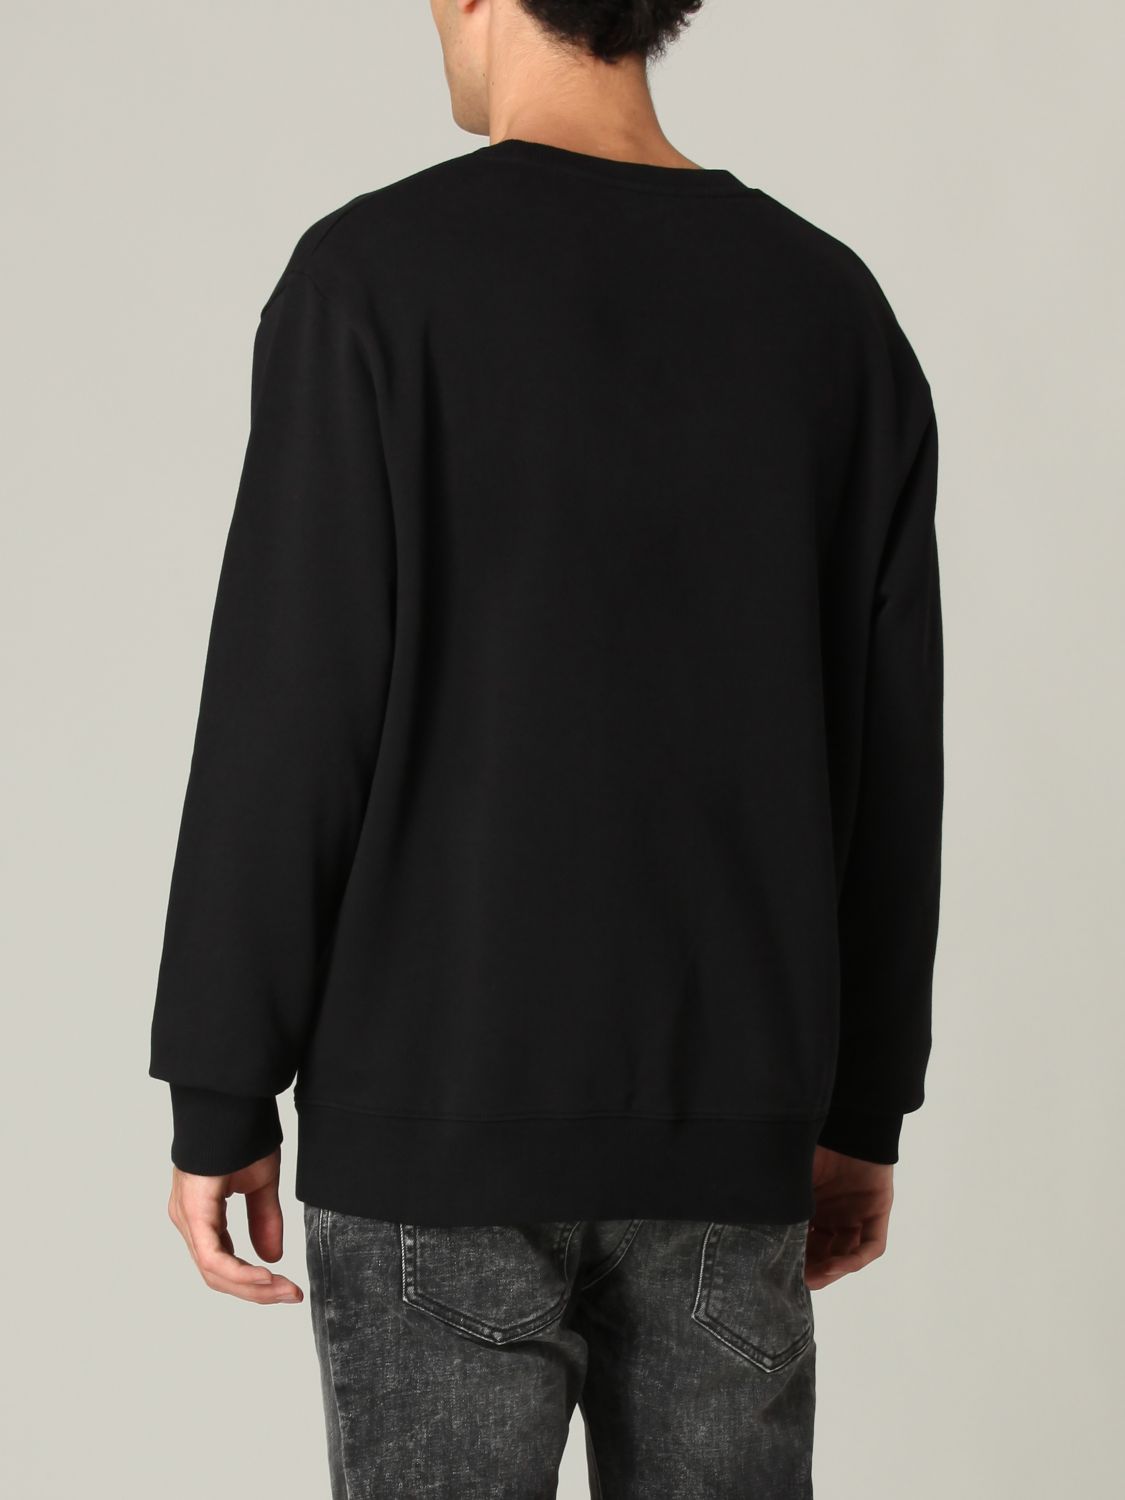 Sweatshirt Just Cavalli: Sweater men Just Cavalli black 2